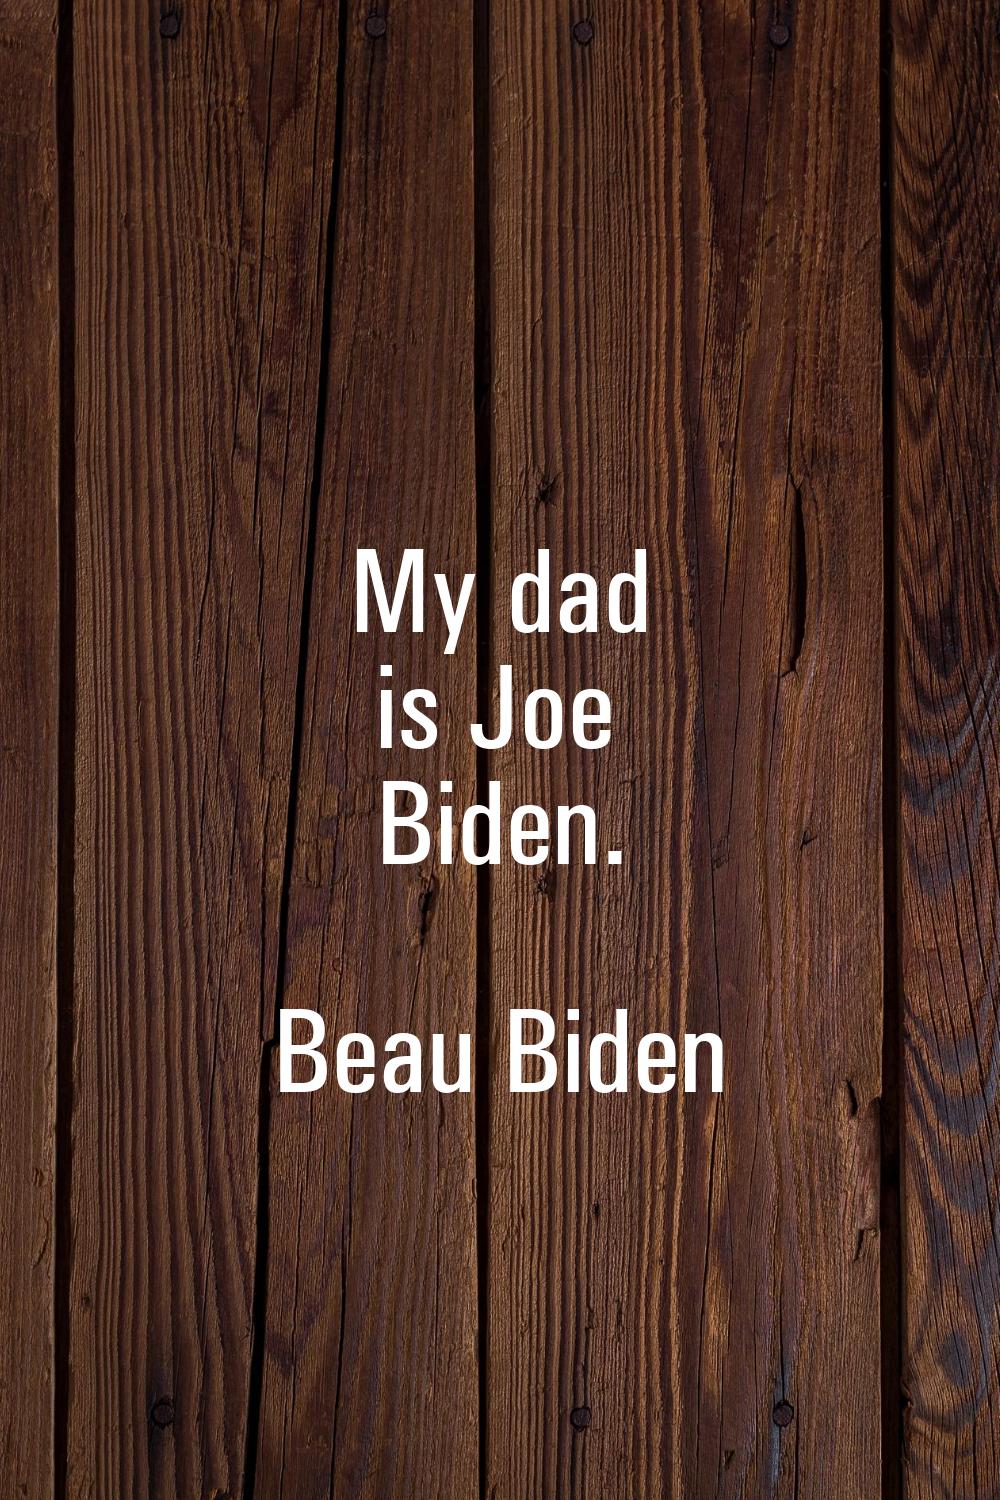 My dad is Joe Biden.